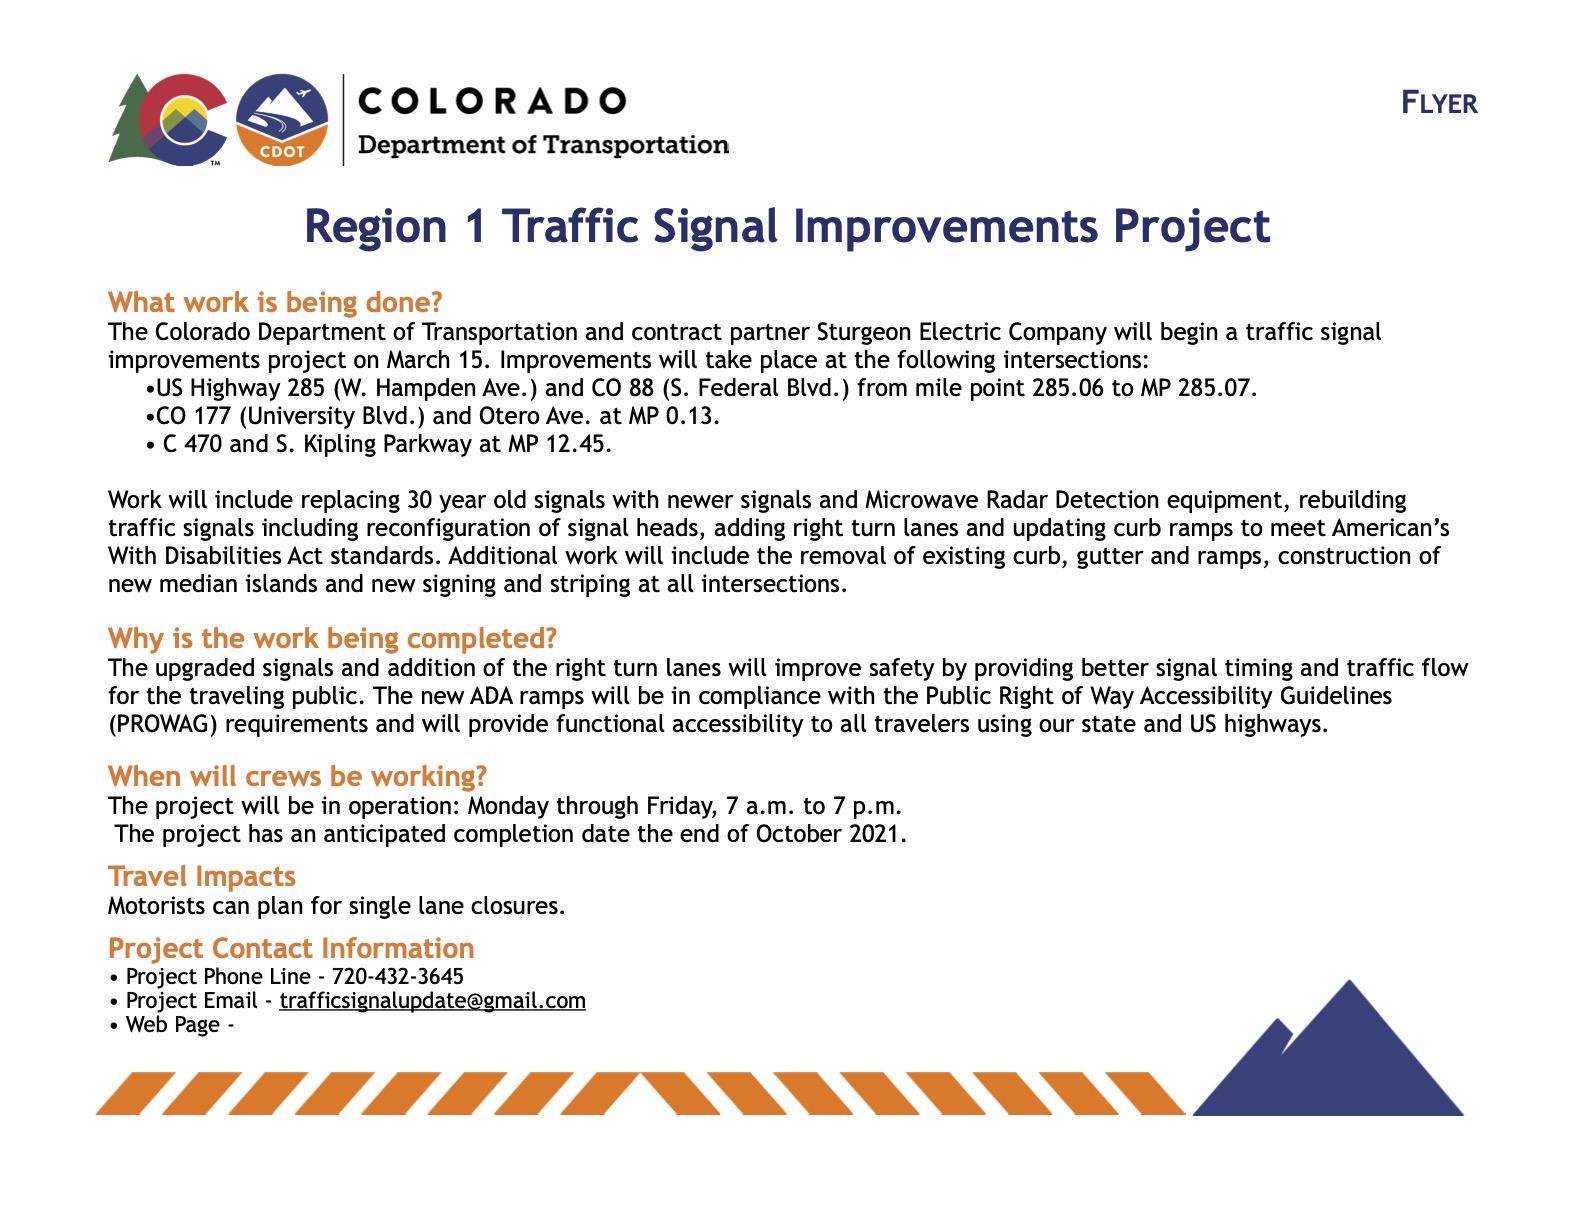 Flyer R1 Traffic Signal Improvements (1).jpg detail image